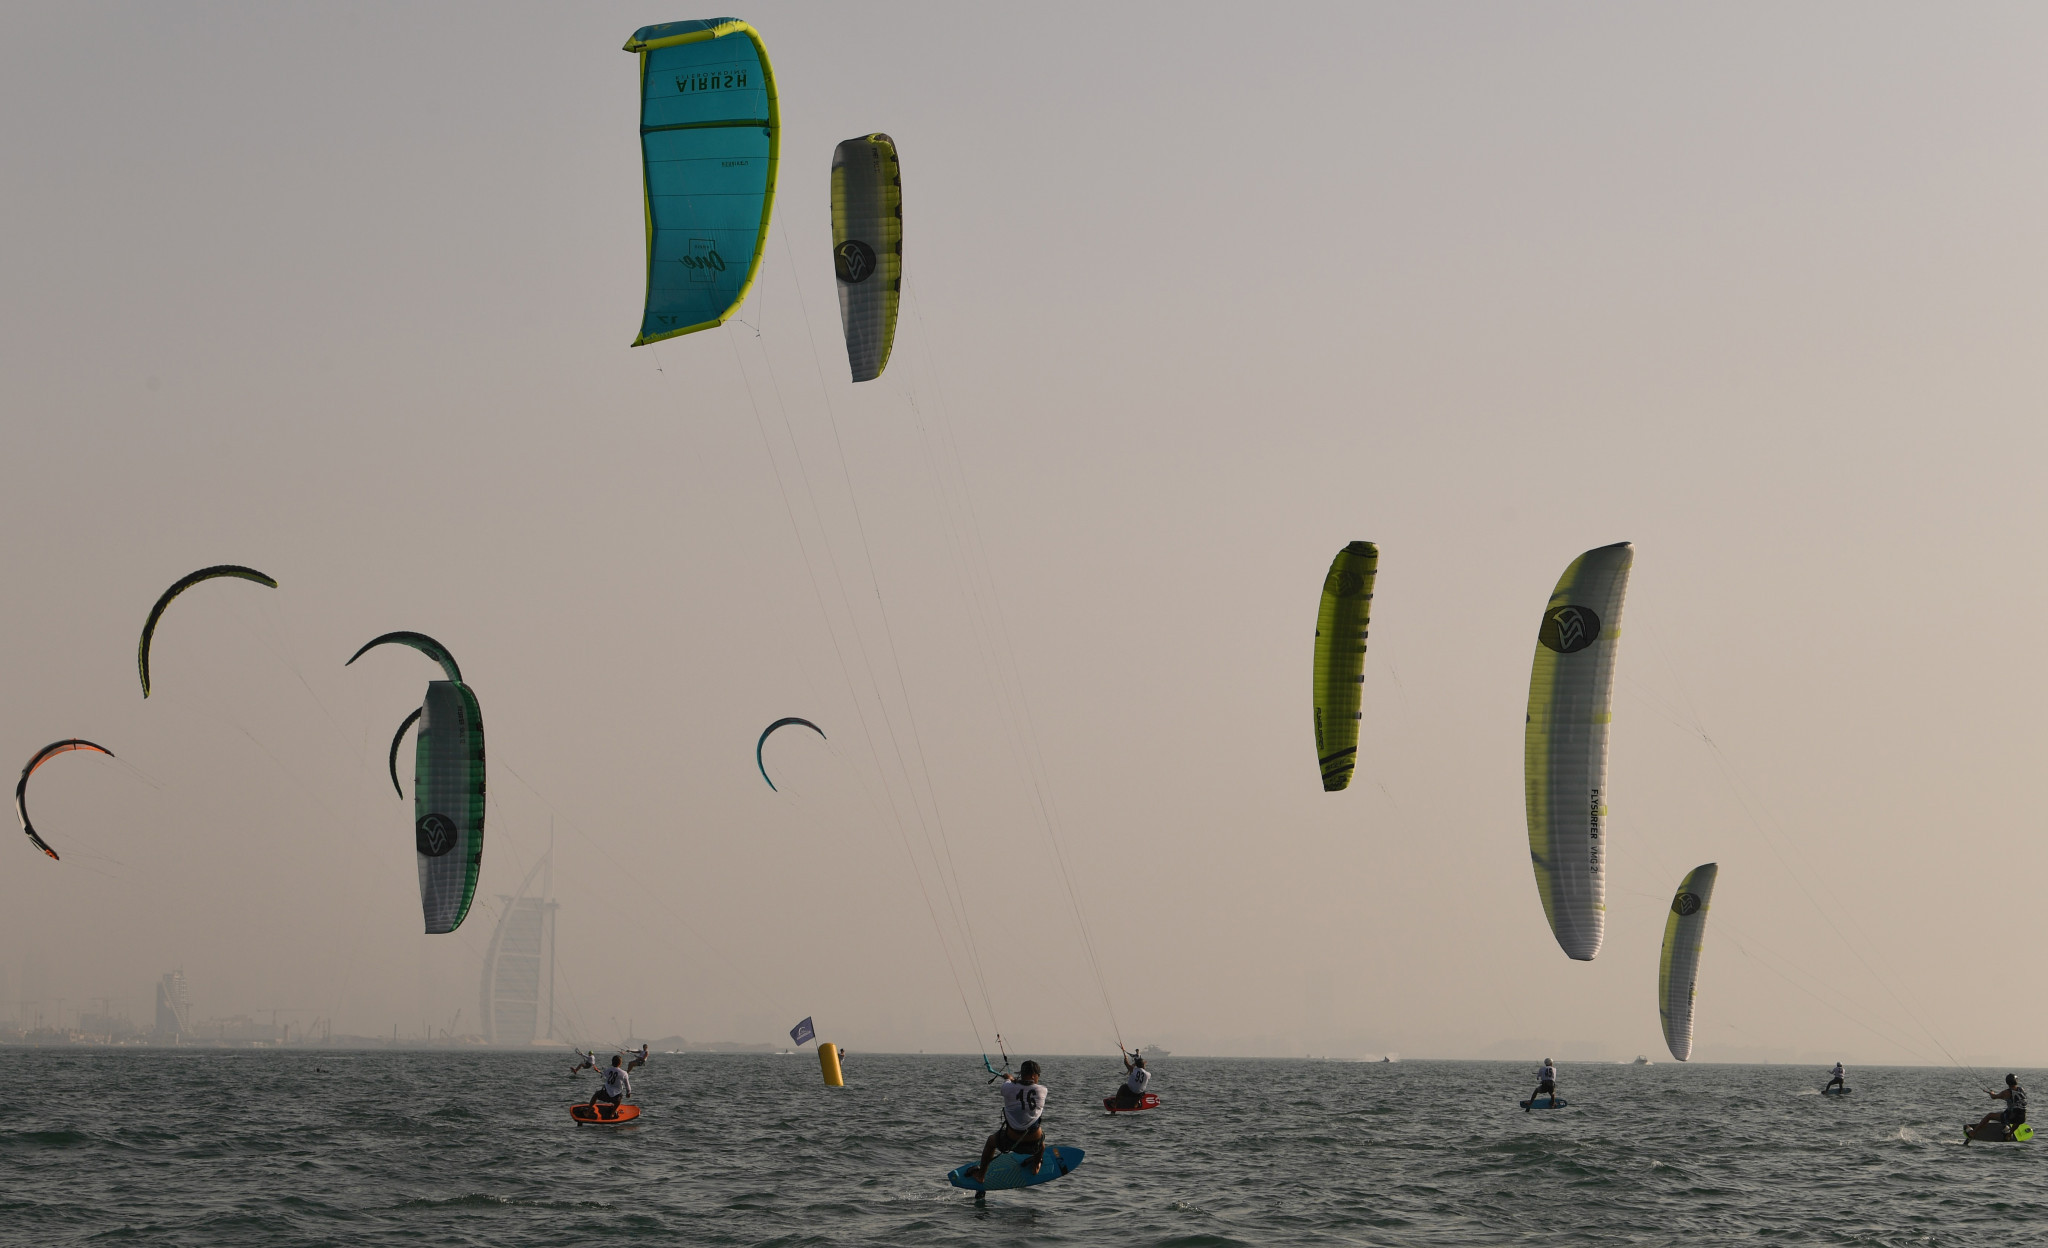 French kiteboarding team hold training camp with eyes on Paris 2024 – Insidethegames.biz